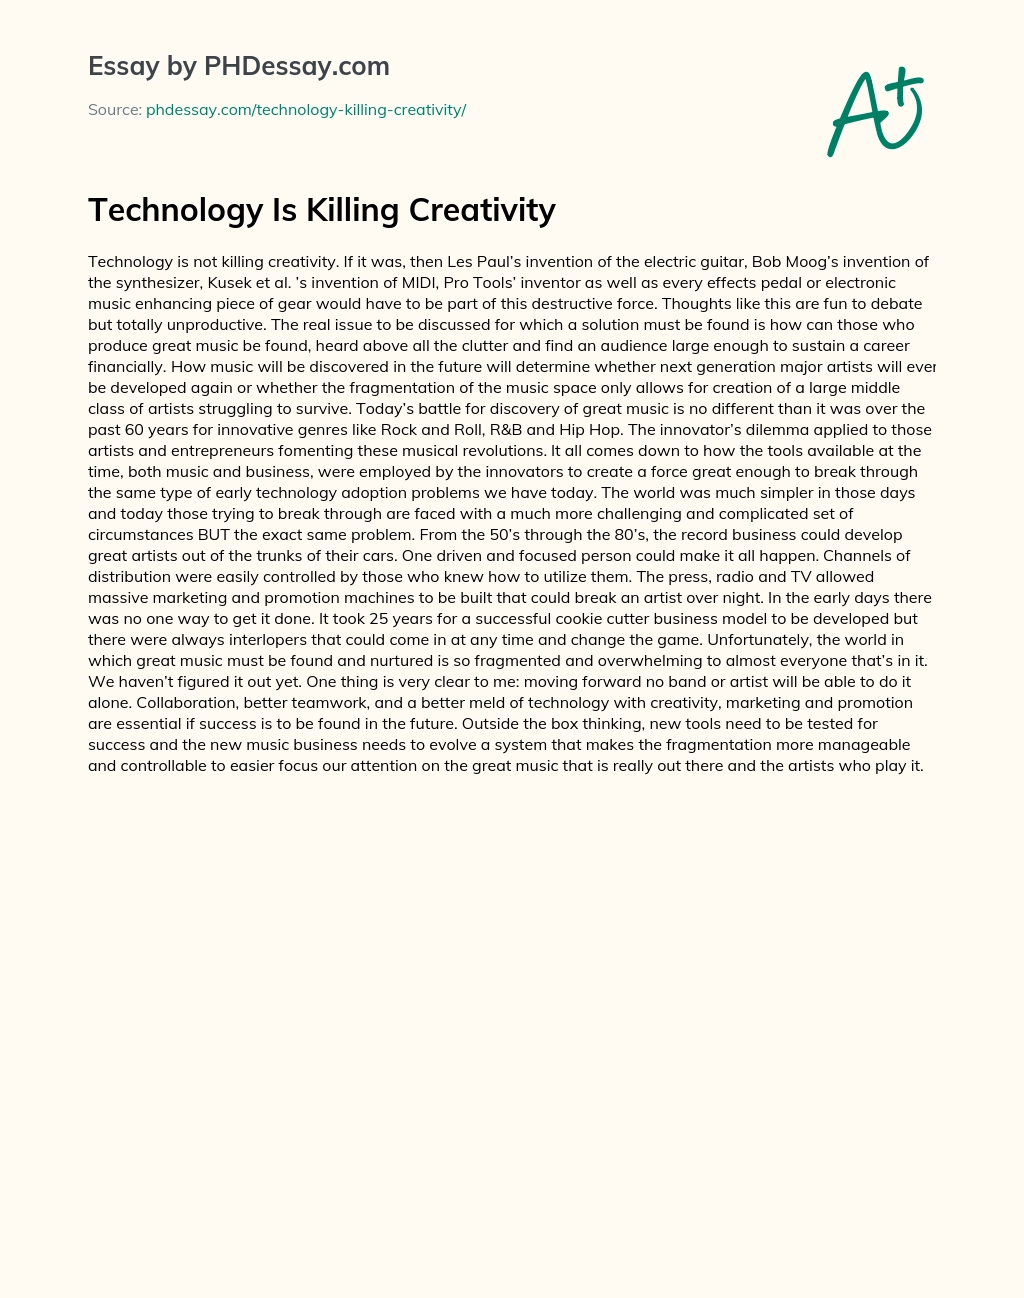 Technology Is Killing Creativity essay